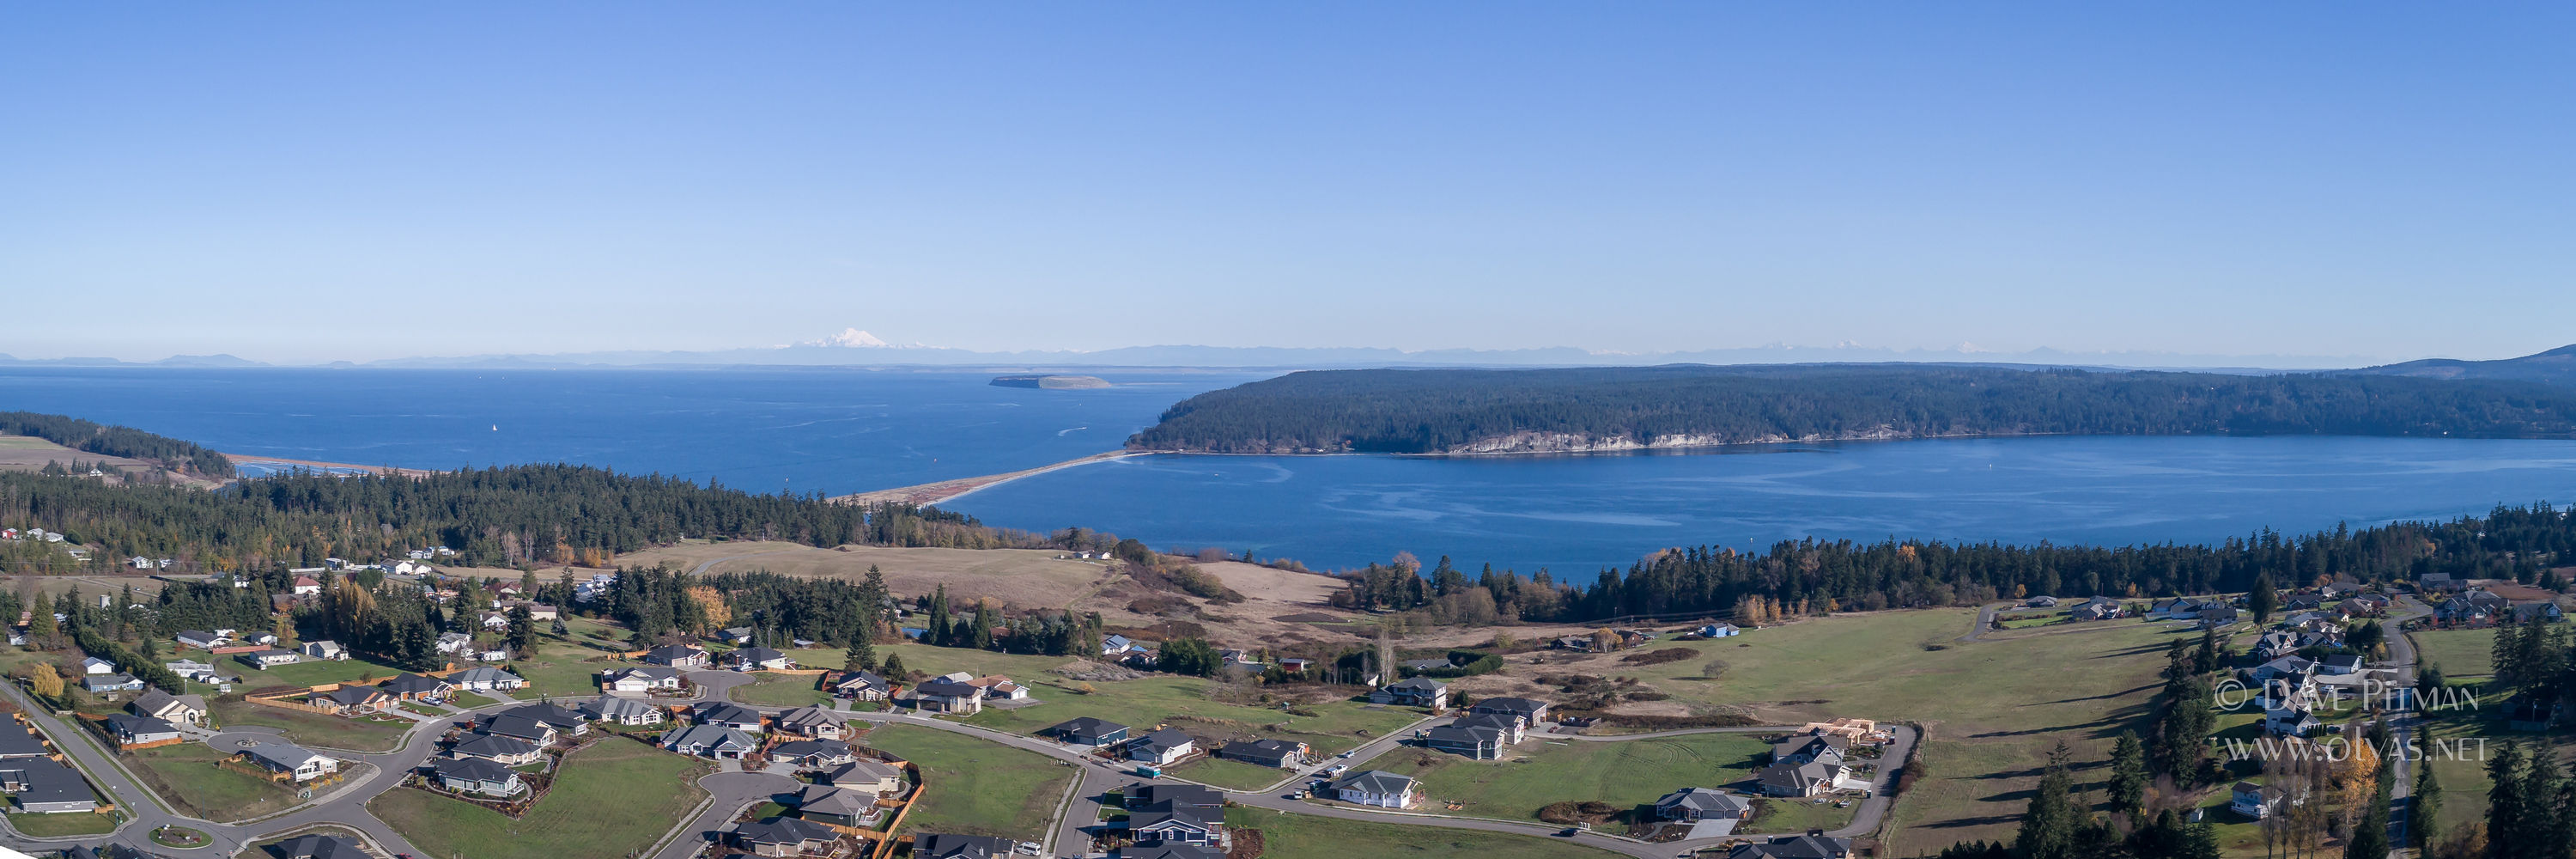 Drone Aerial 360 Panorama Photography service, Washington